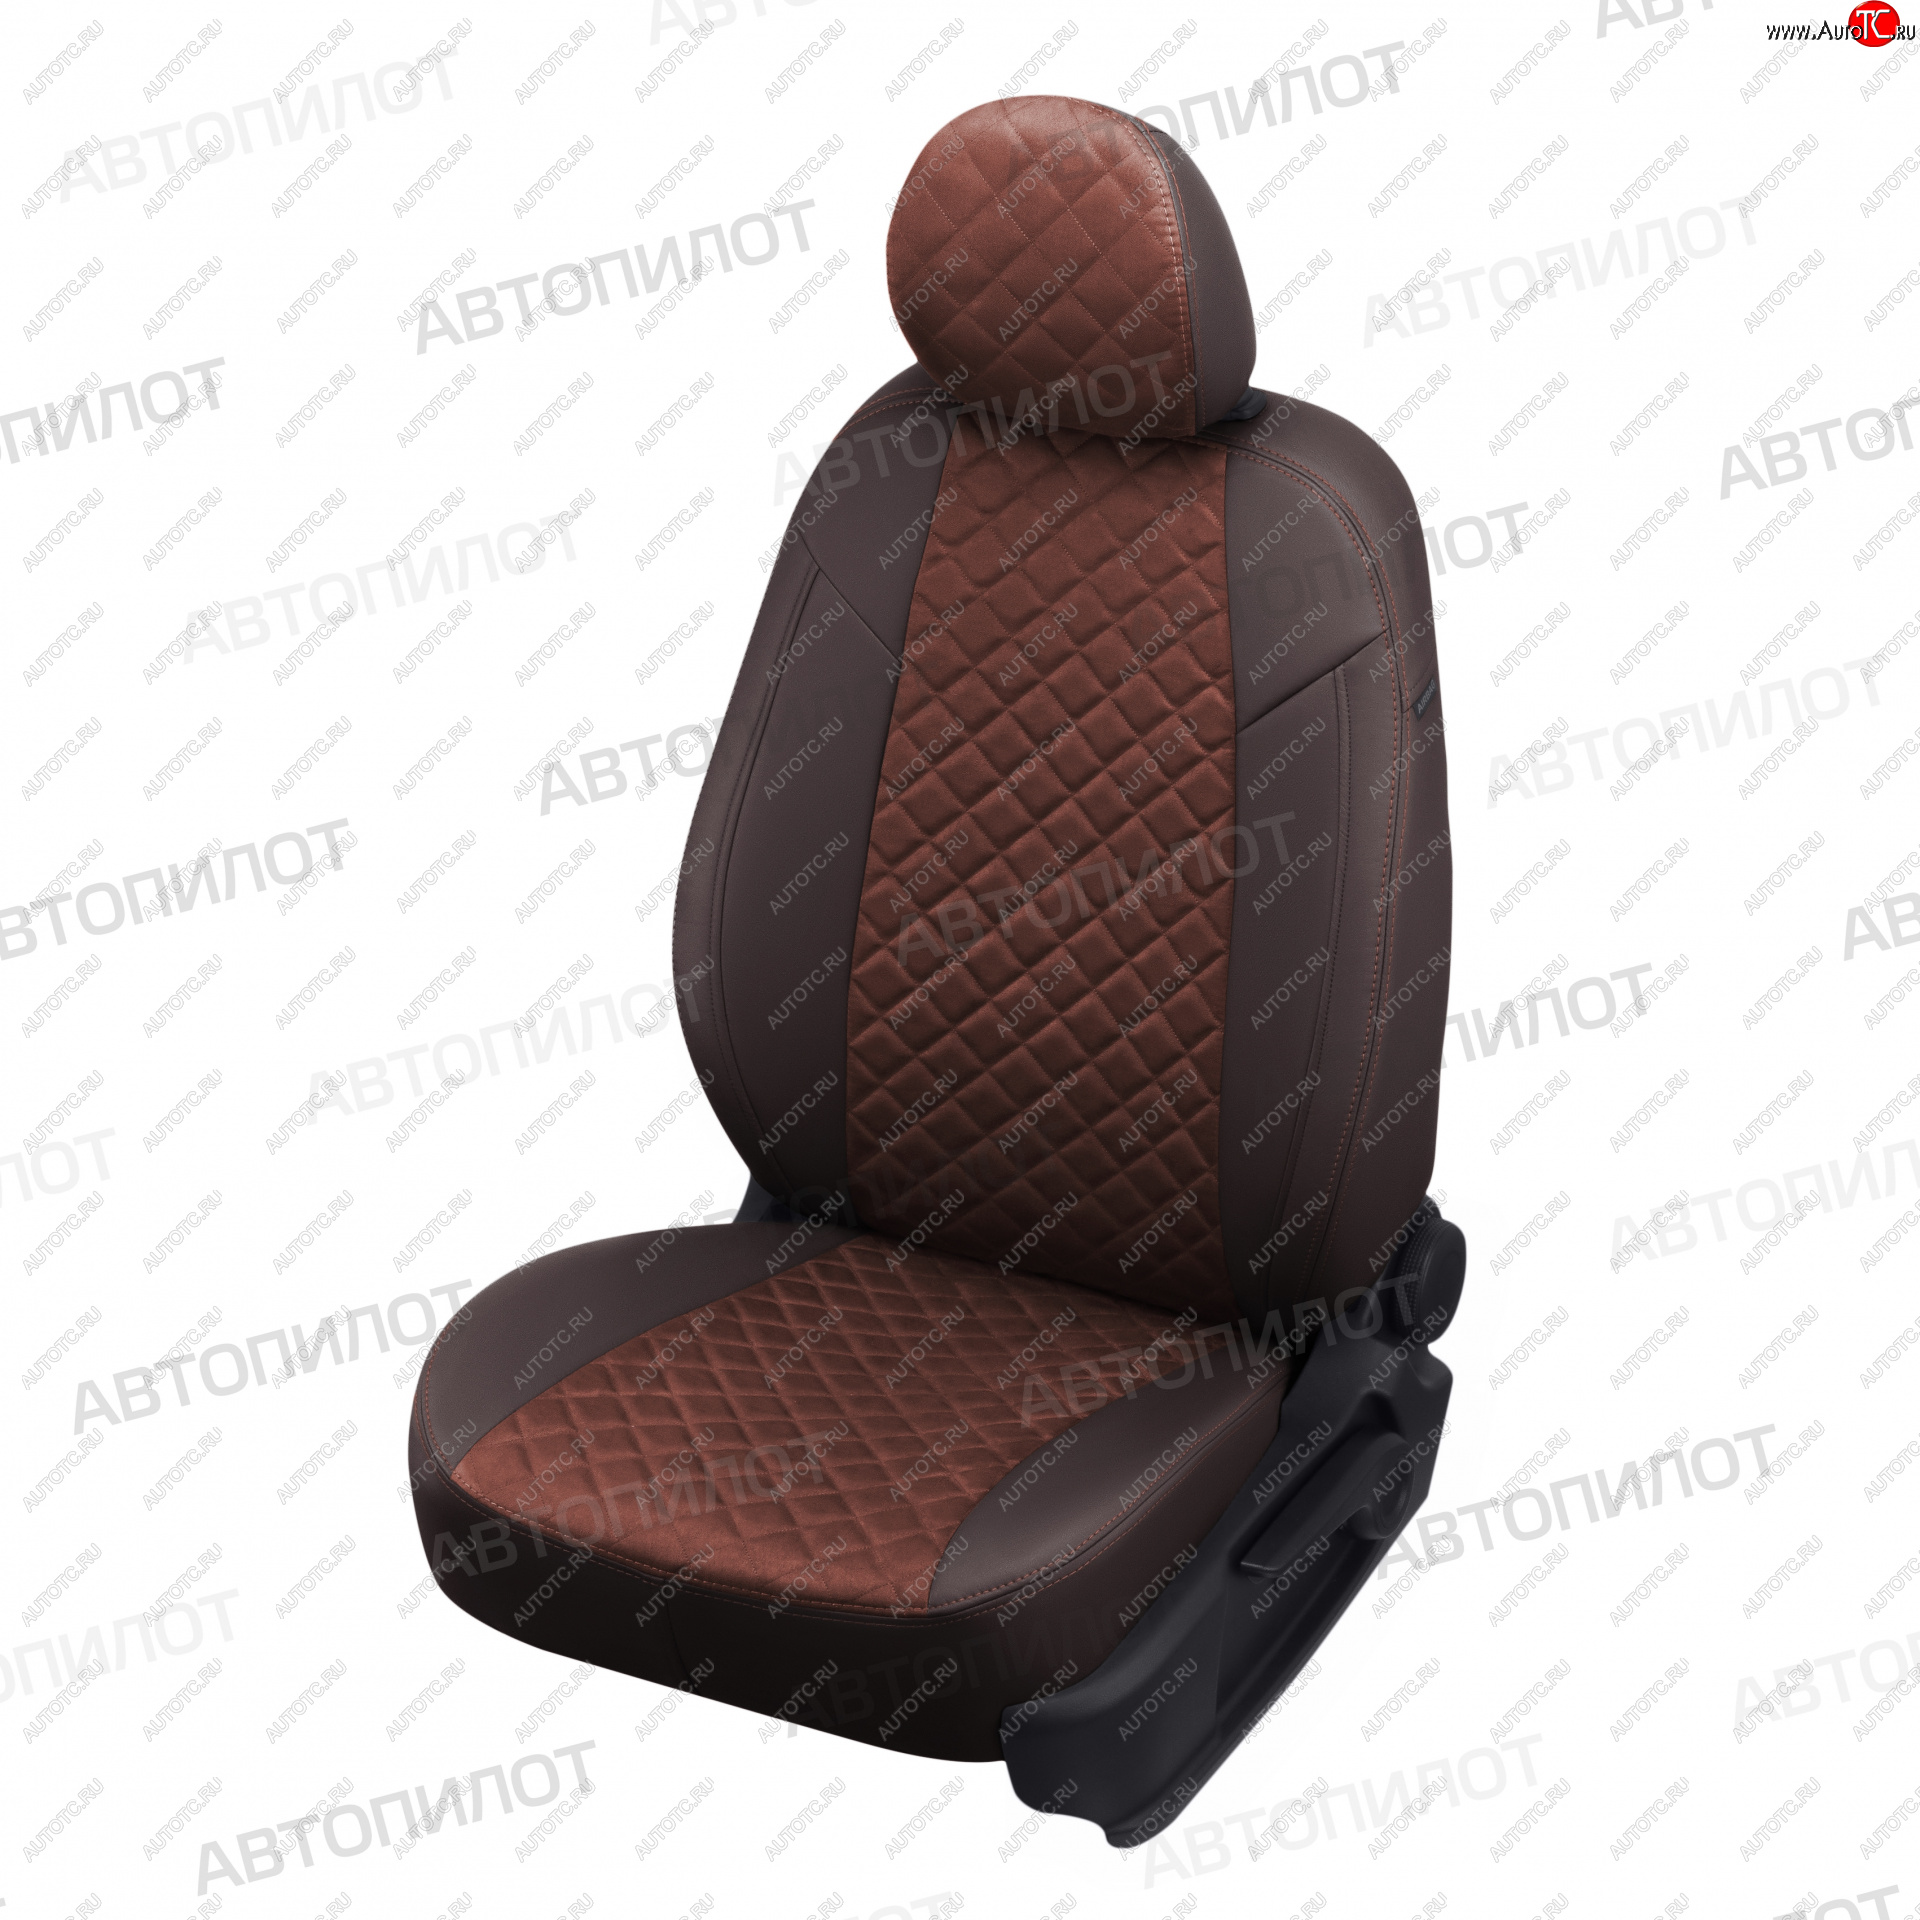 13 999 р. Чехлы сидений (экокожа/алькантара) Автопилот Ромб  BMW 1 серия  F20 (2012-2020) (шоколад)